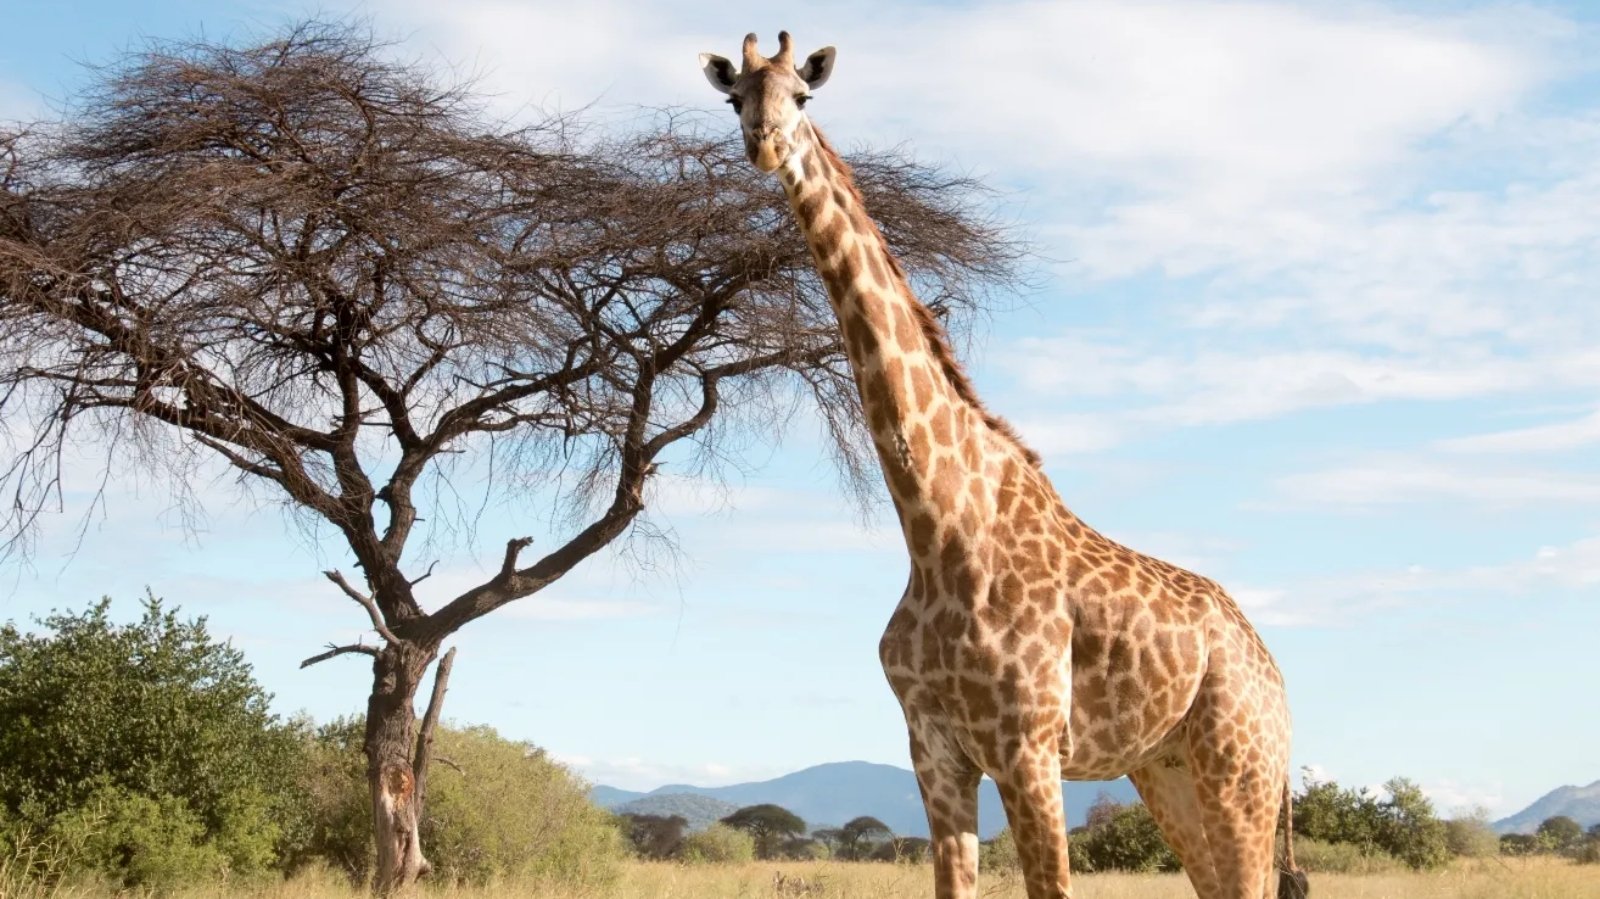 A giraffe walks along a plain in front of a tree